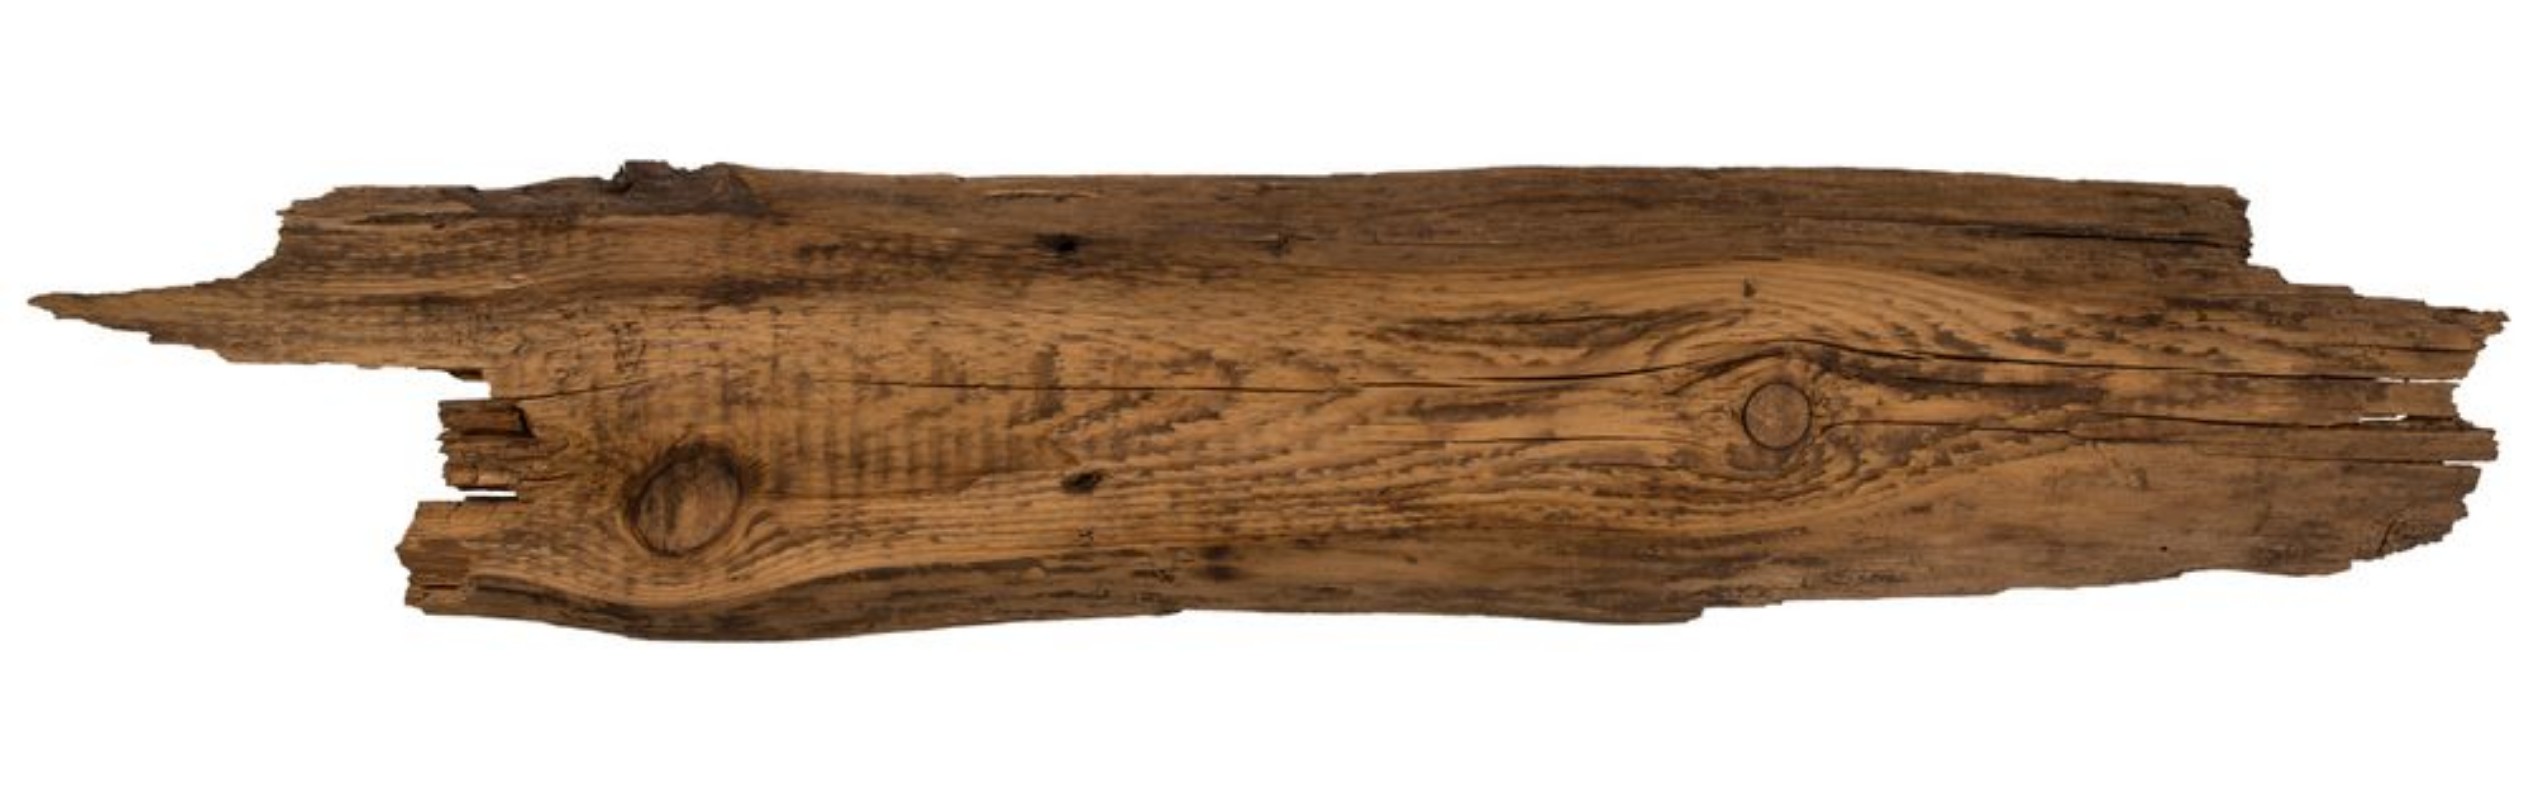 Afbeeldingen van Old planks isolated on white